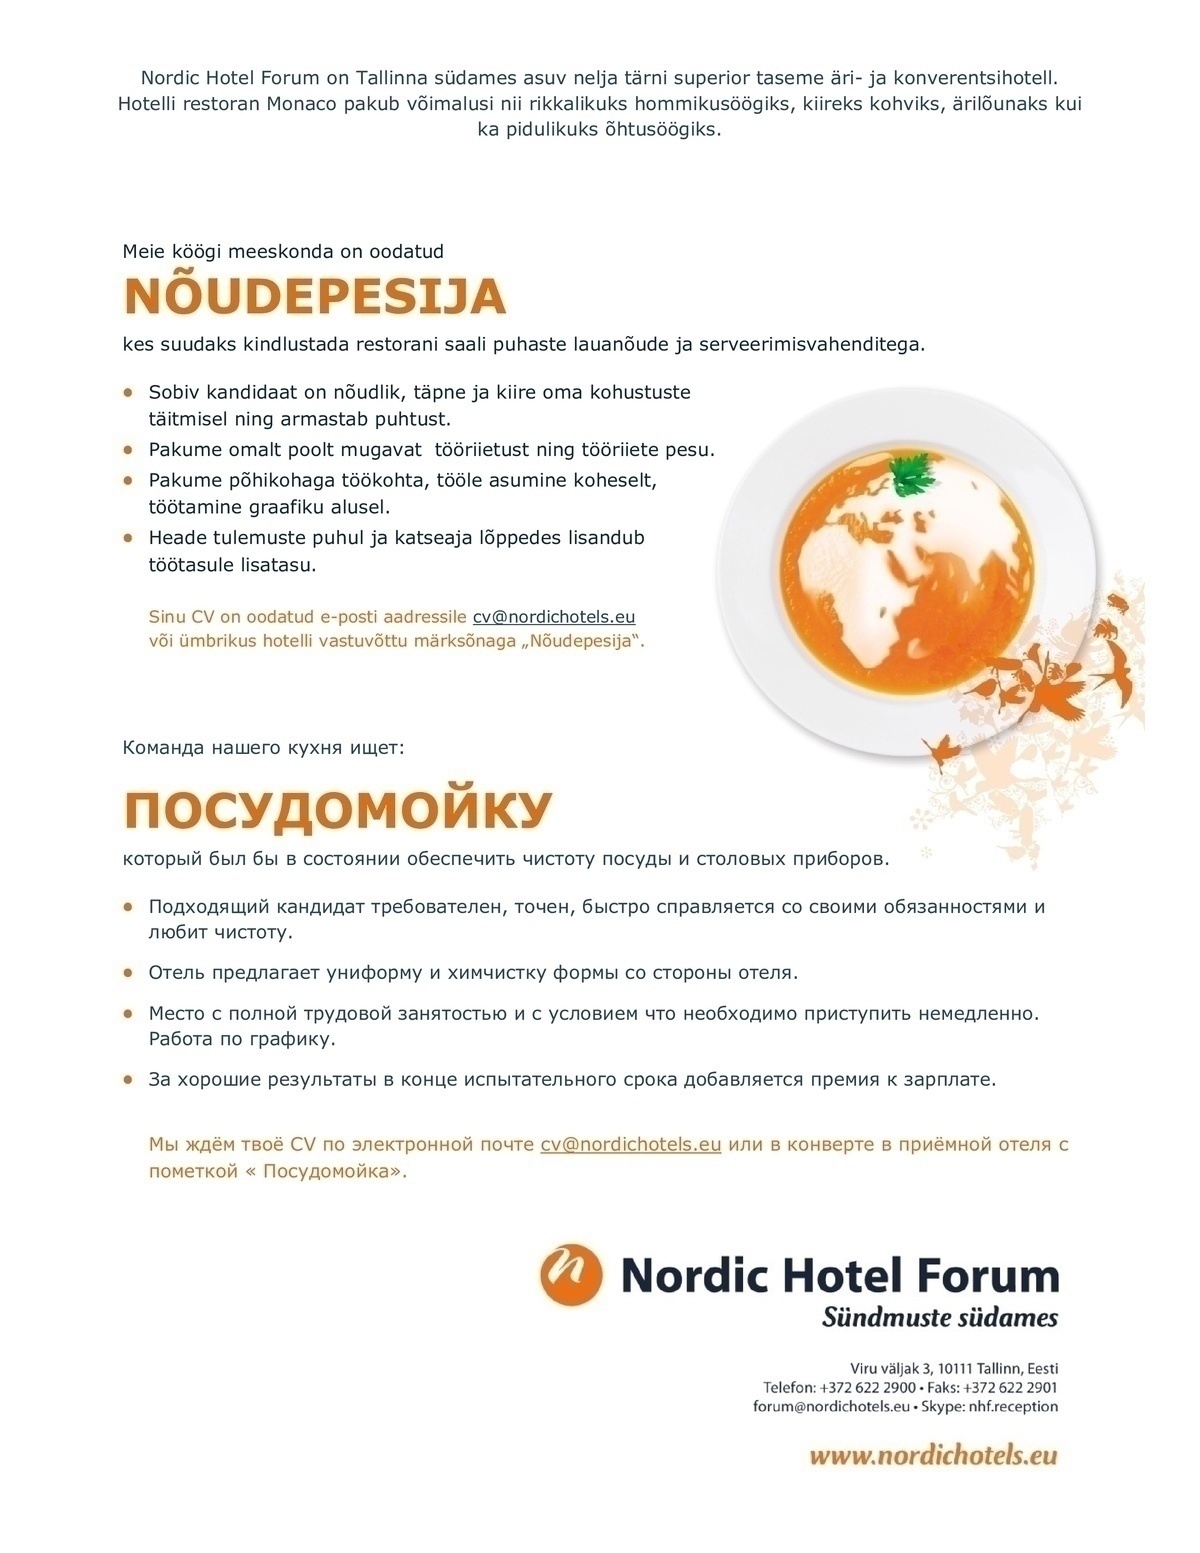 Nordic Hotels OÜ Nõudepesija / посудомойка